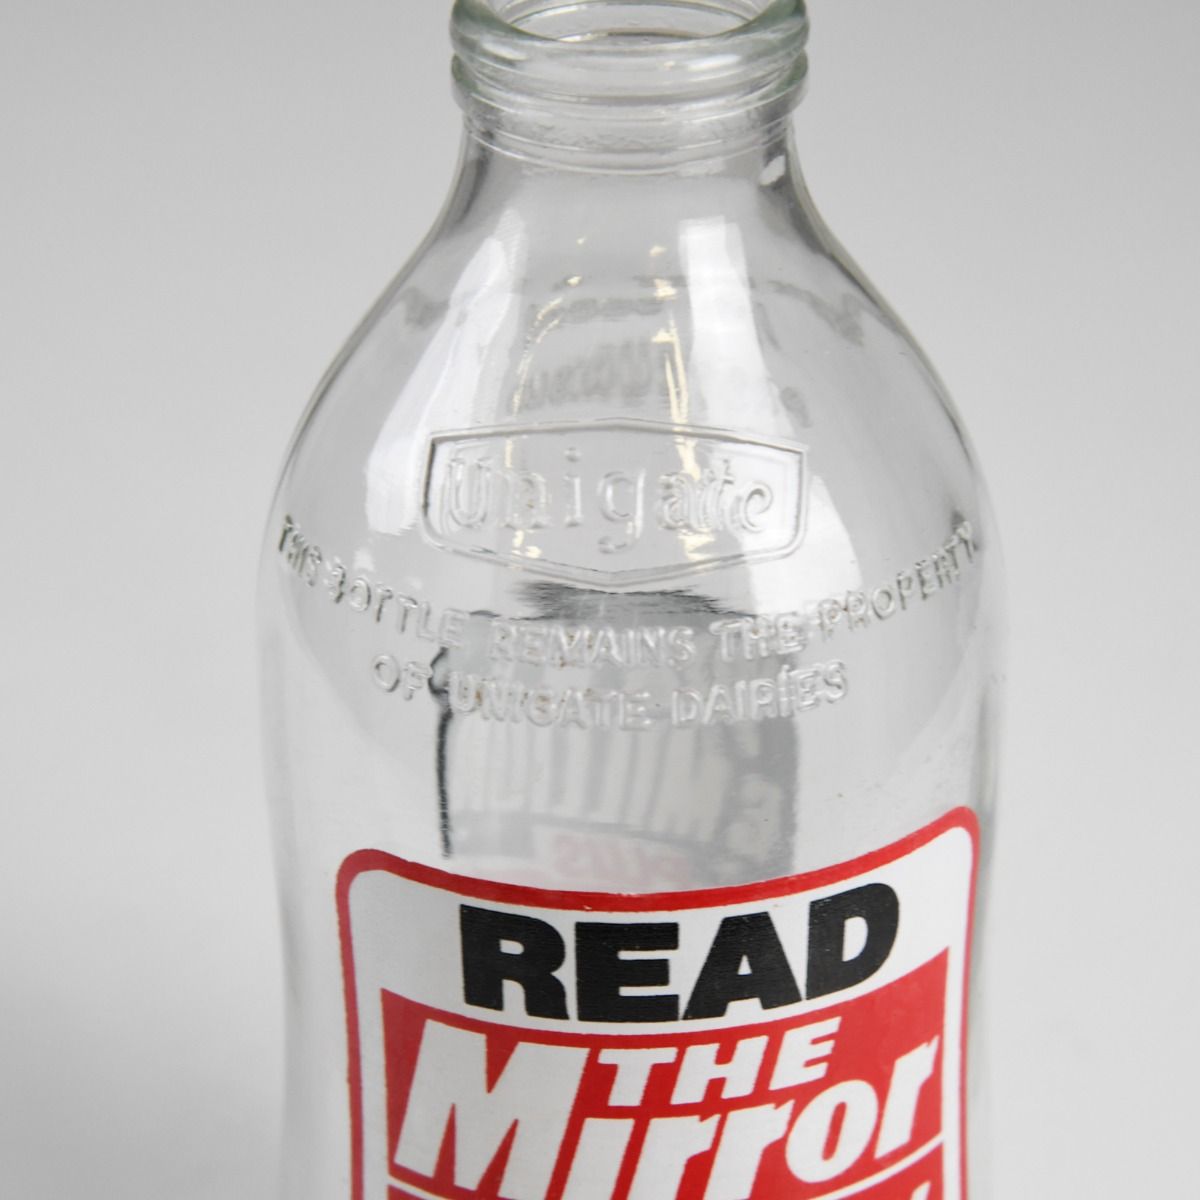 Vintage Advertising Milk Bottle The Mirror